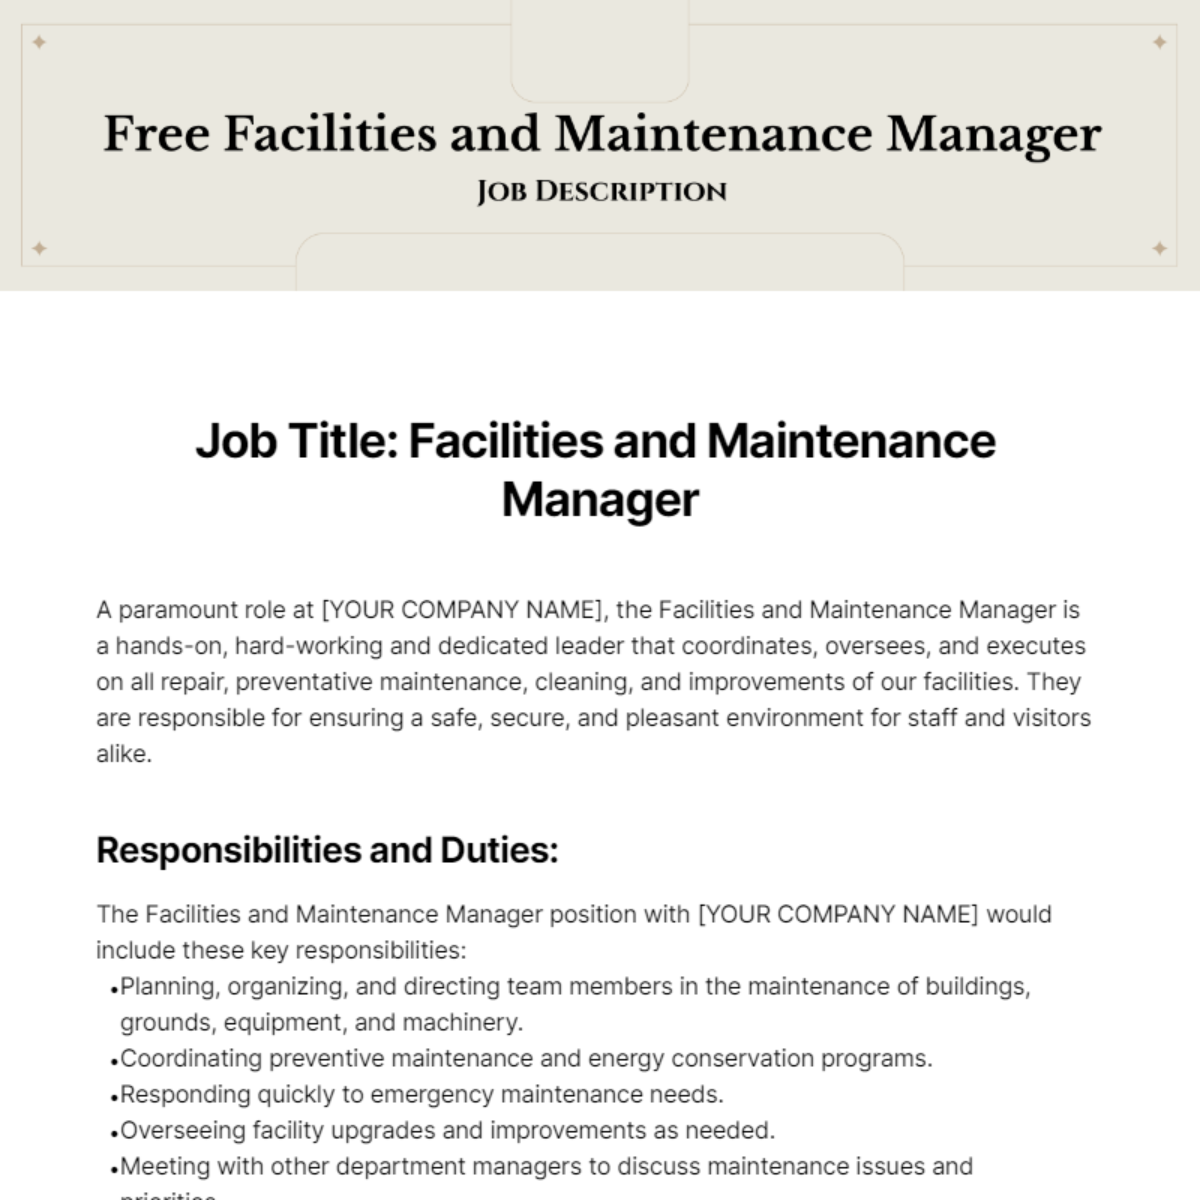 Facilities and Maintenance Manager Job Description Template